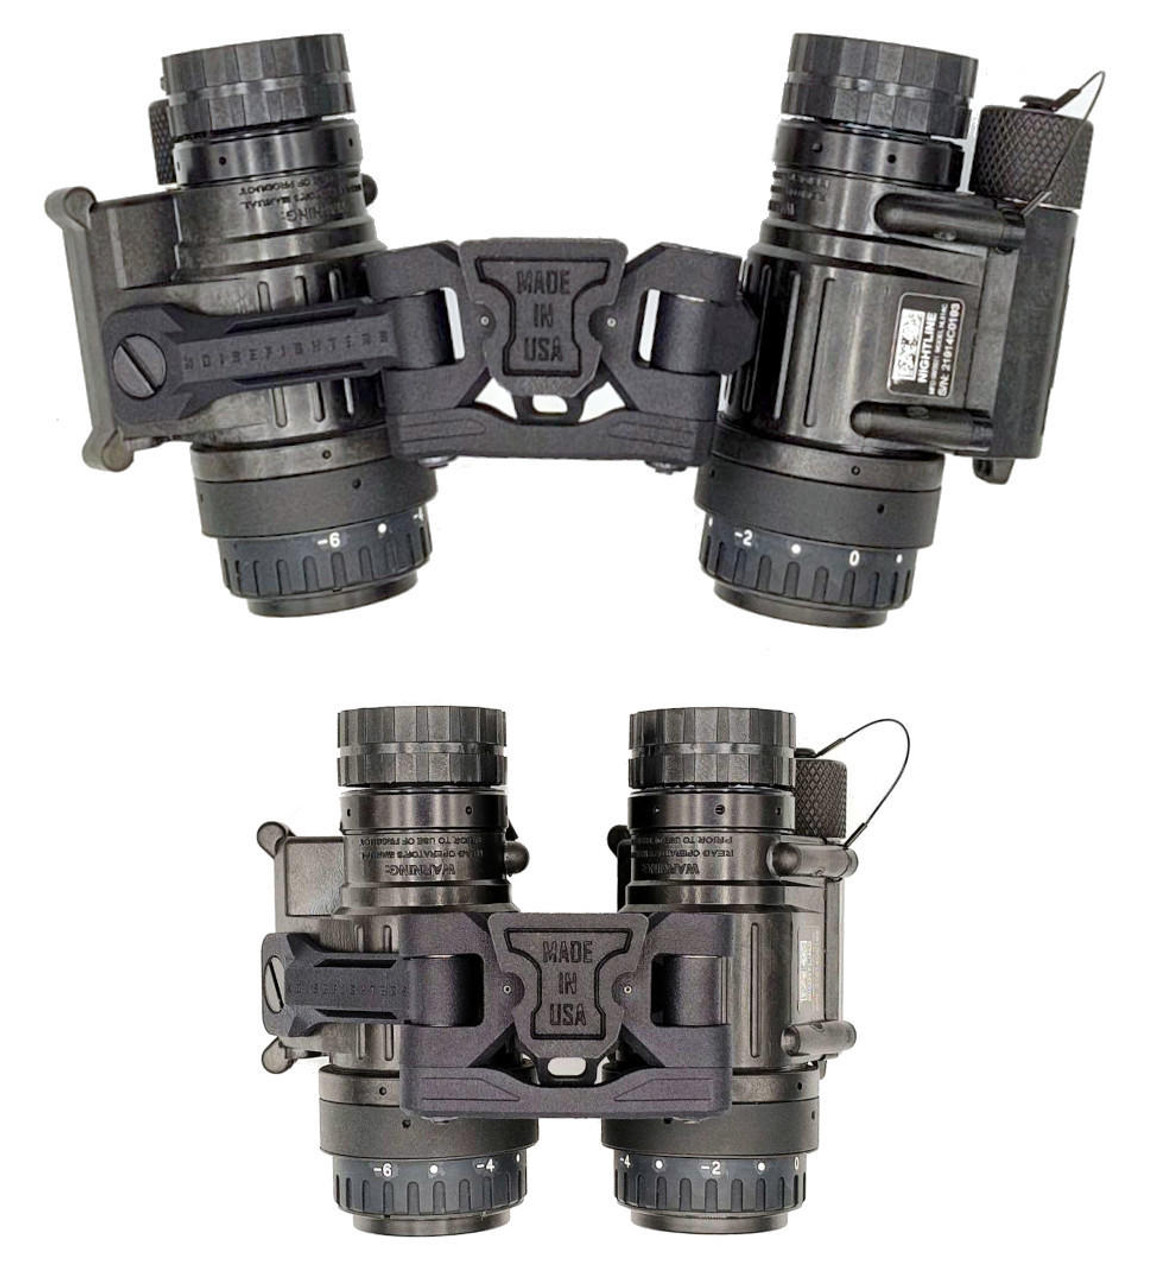  NoiseFighters Panobridge MK3 Dual AN/PVS-14 Night Vision Bridge 